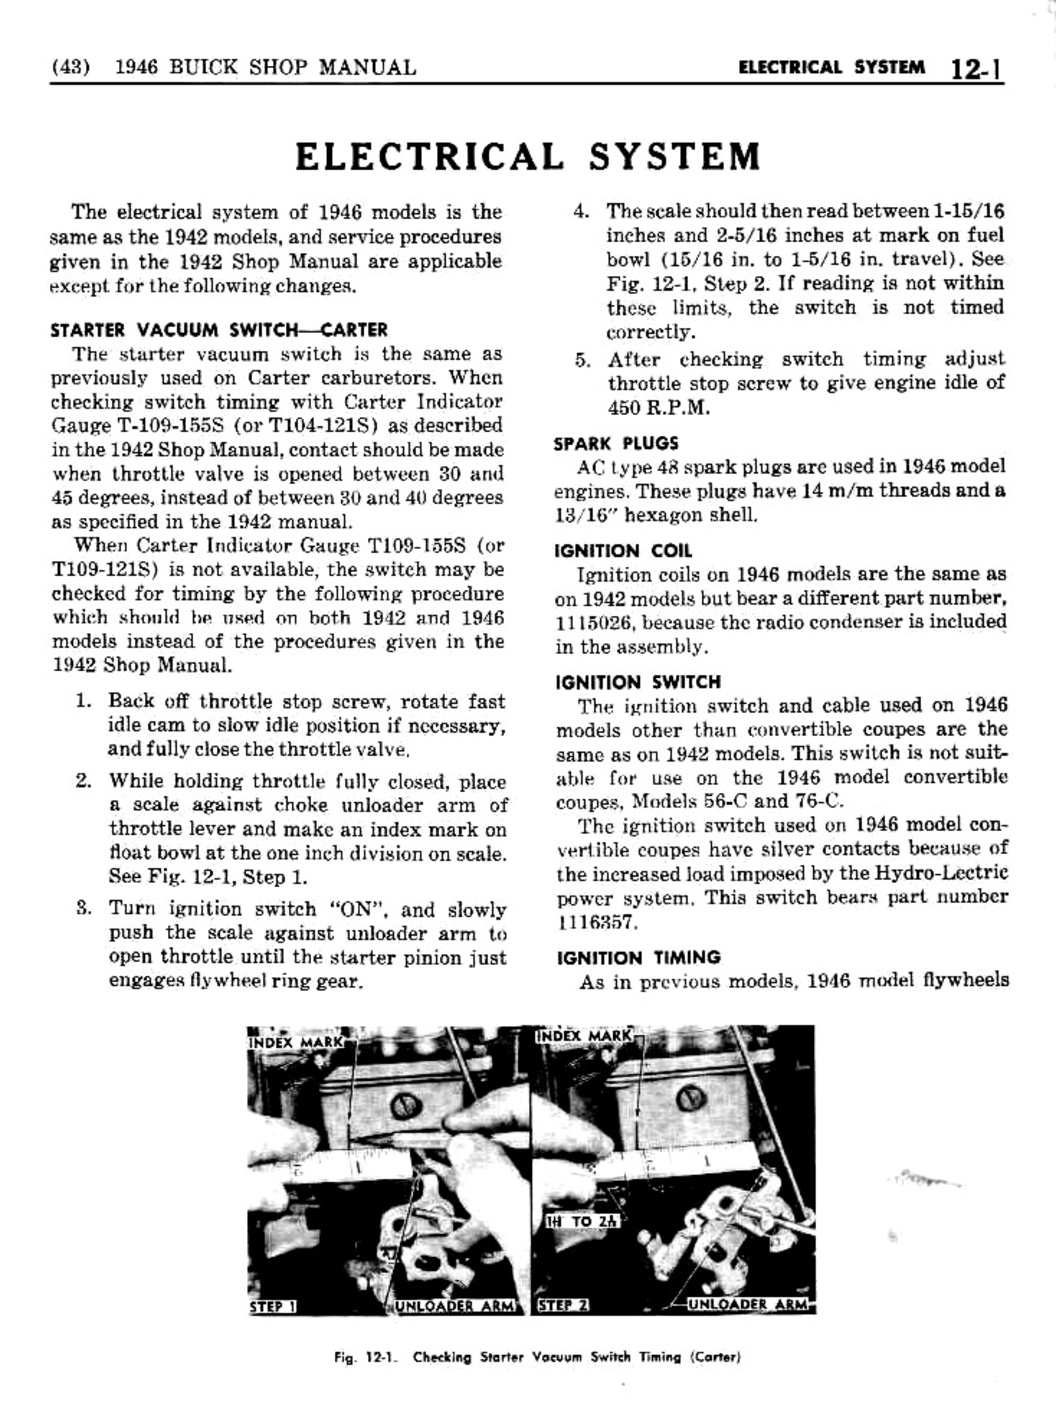 n_12 1946 Buick Shop Manual - Electrical System-001-001.jpg